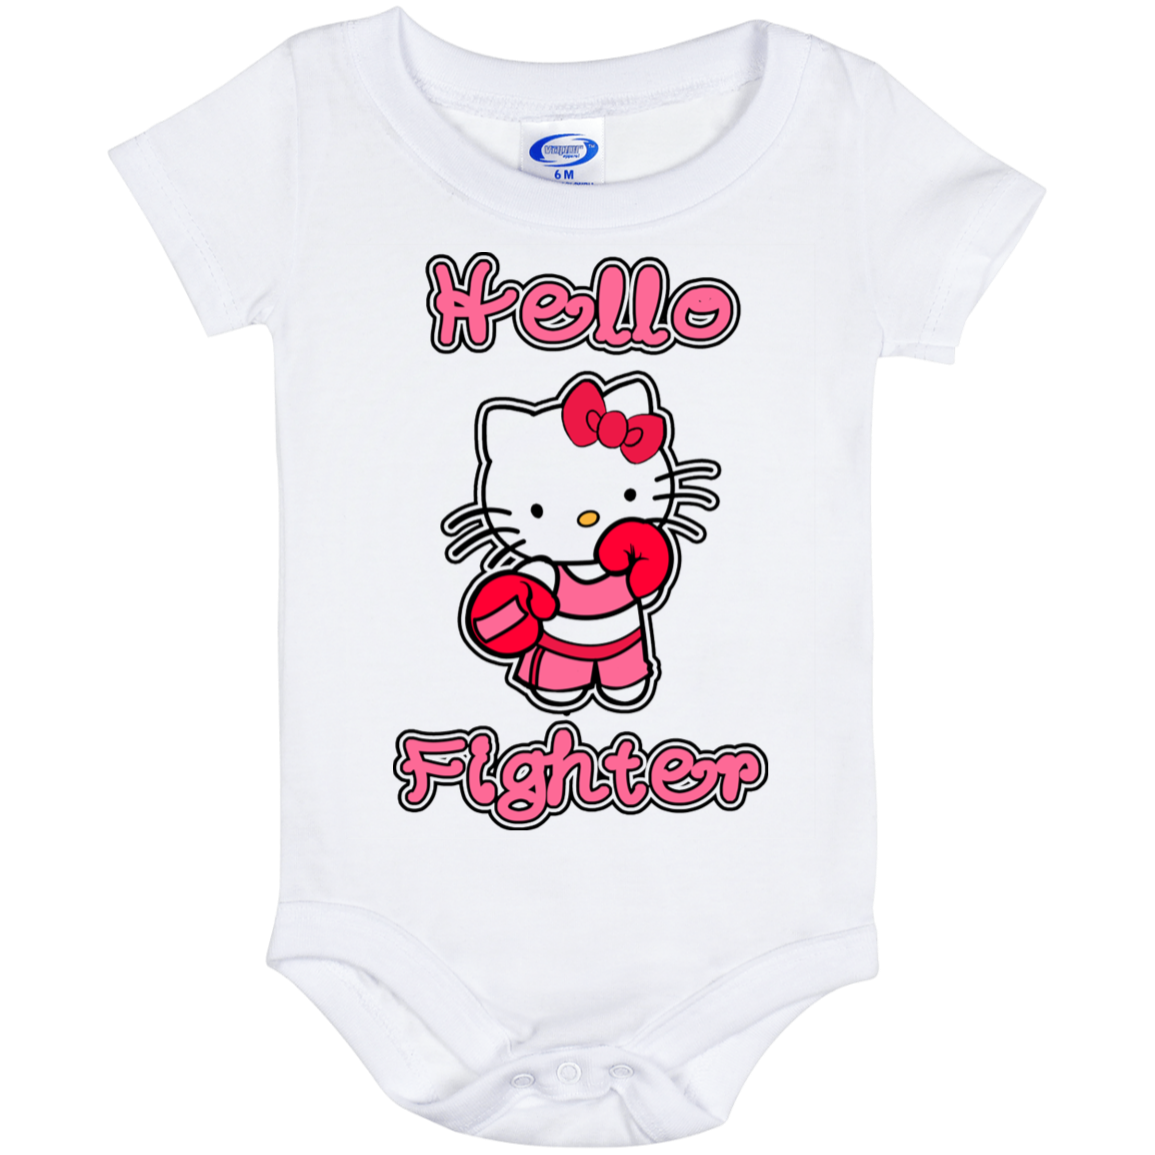 Artichoke Fight Gear Custom Design #11. Hello Fighter. Baby Onesie 6 Month